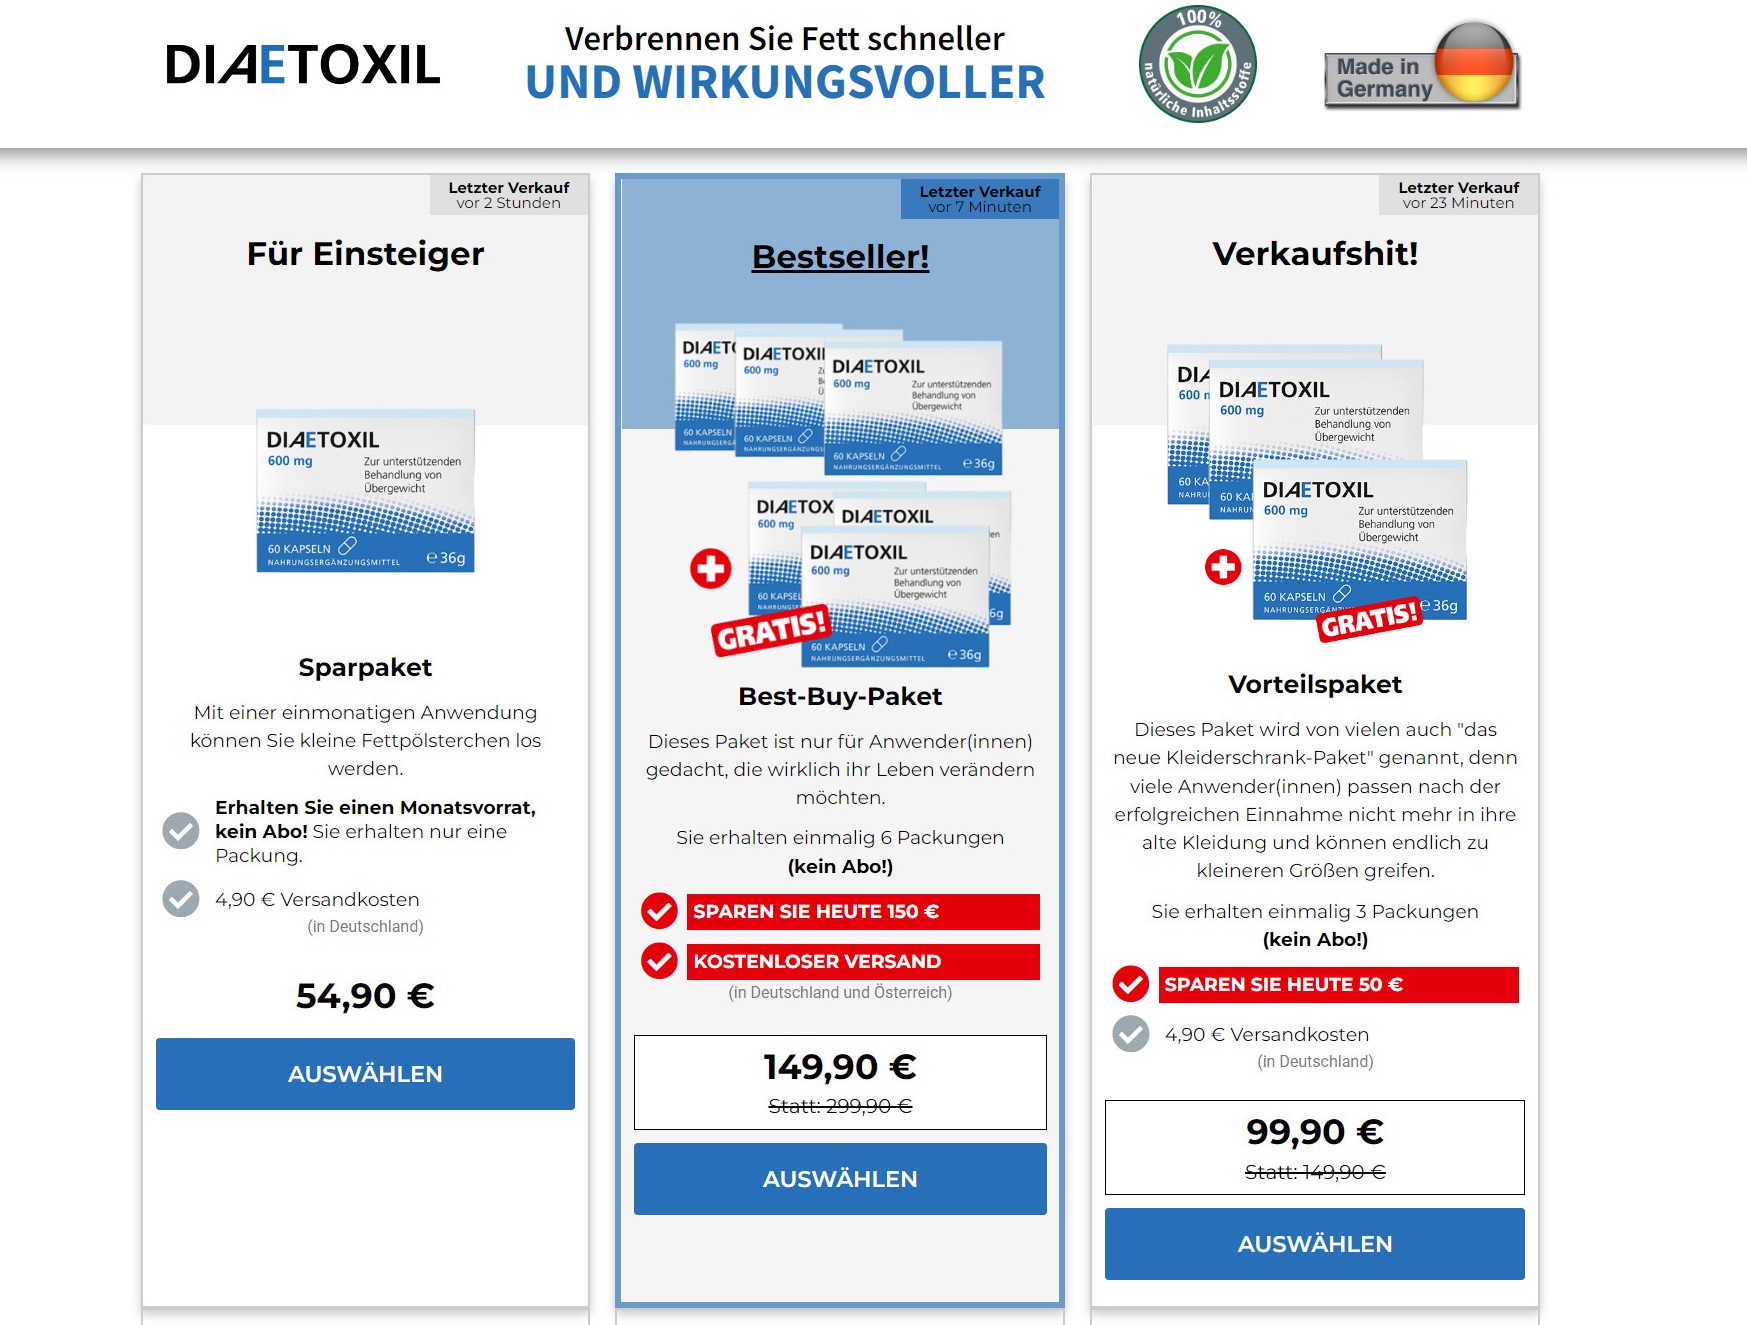 Diaetoxil Deutschland Price